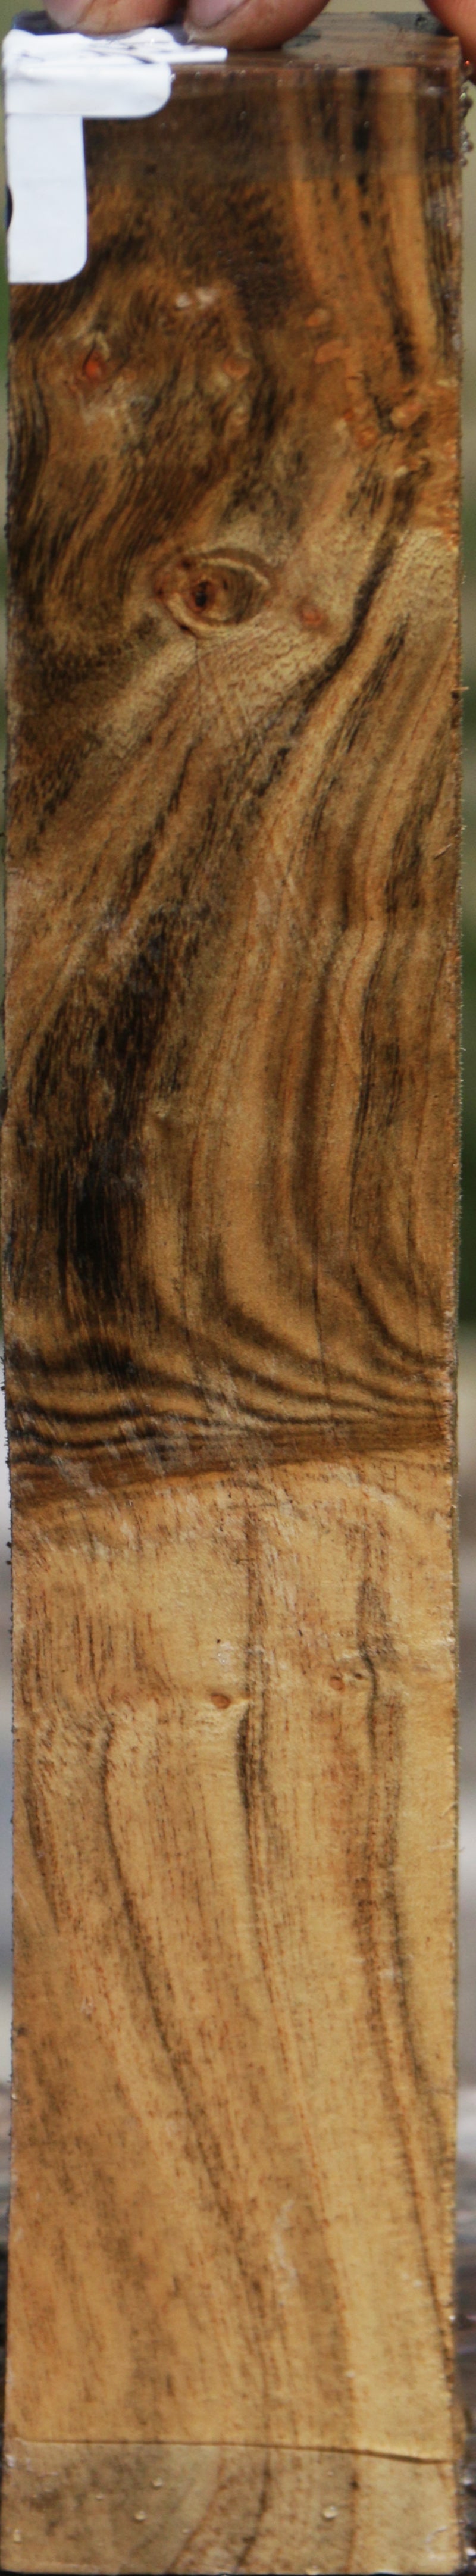 Grafted Pistachio Lumber